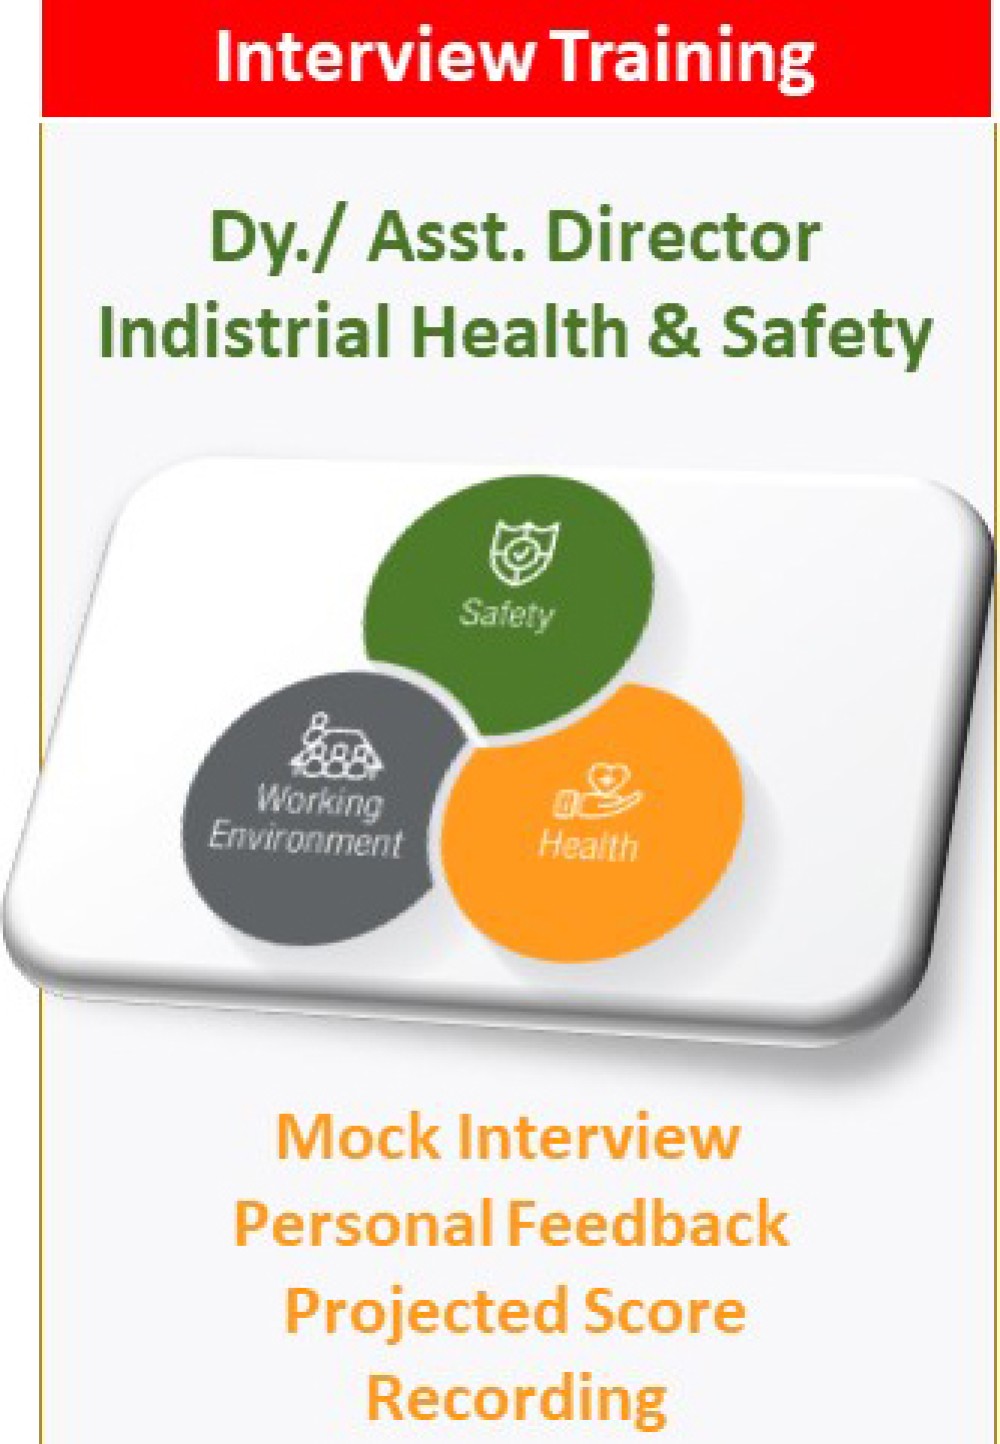 Deputy Director / Asst Director Industrial Health Welfare and Safety Interview Training